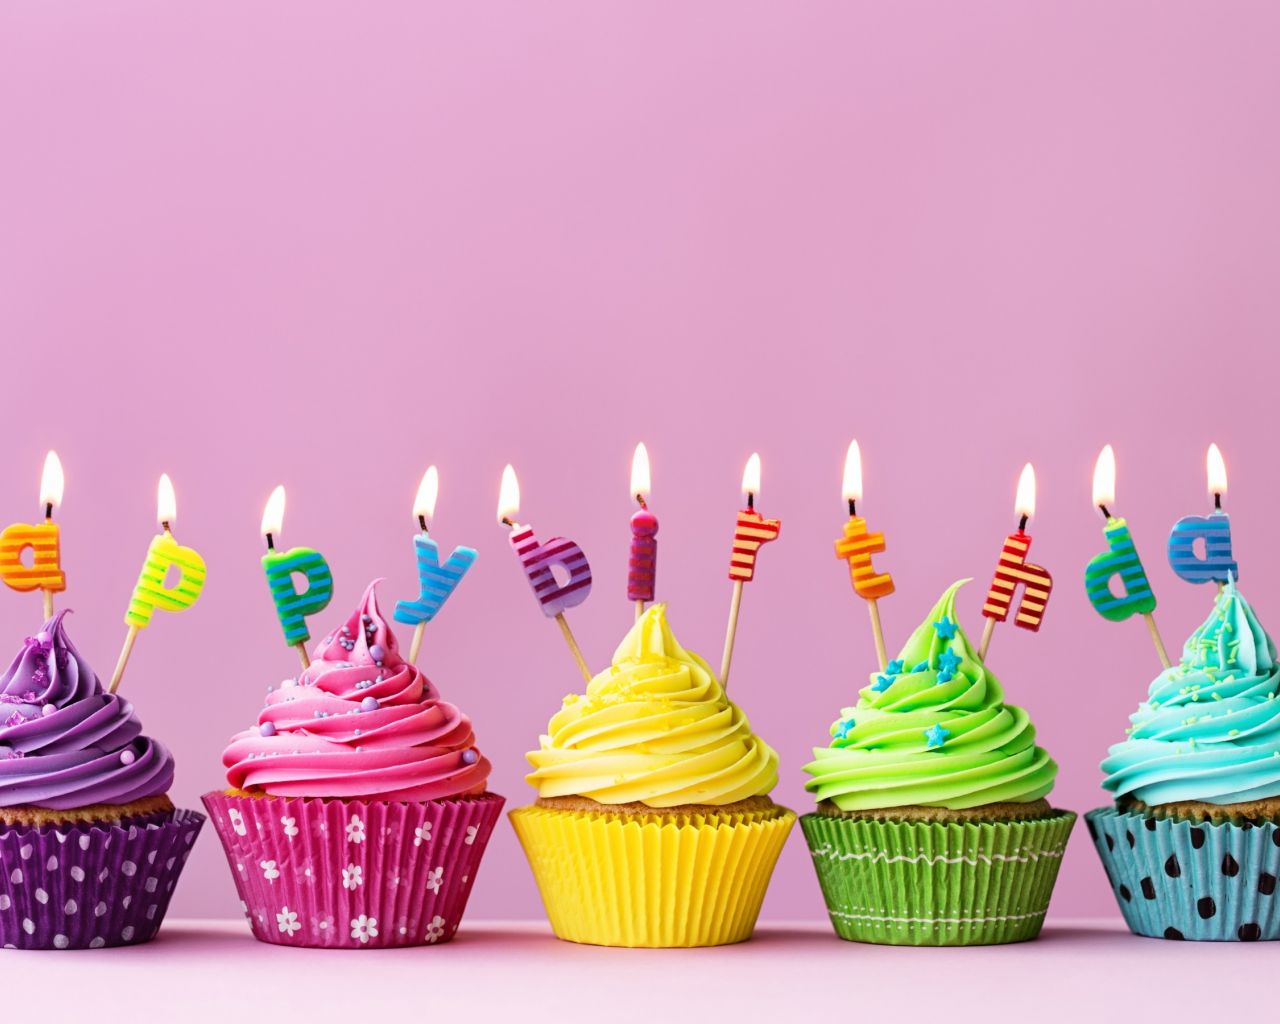 decoration, celebration, colorful, кекс, cupcake, день рождения, candle, cake, свечи, торт